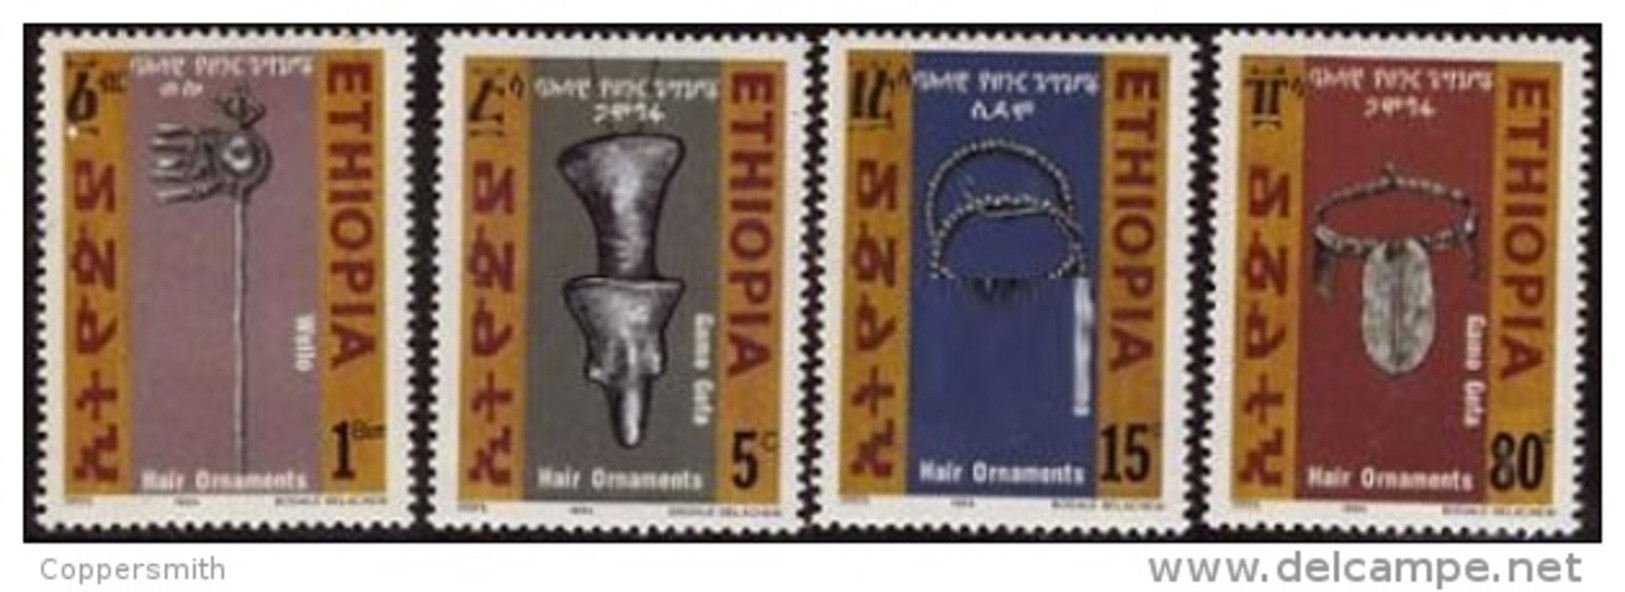 (357) Ethiopia / Ethiopie  Hair Styling / Jewellery / 1994 ** / Mnh  Michel 1482-85 - Ethiopie